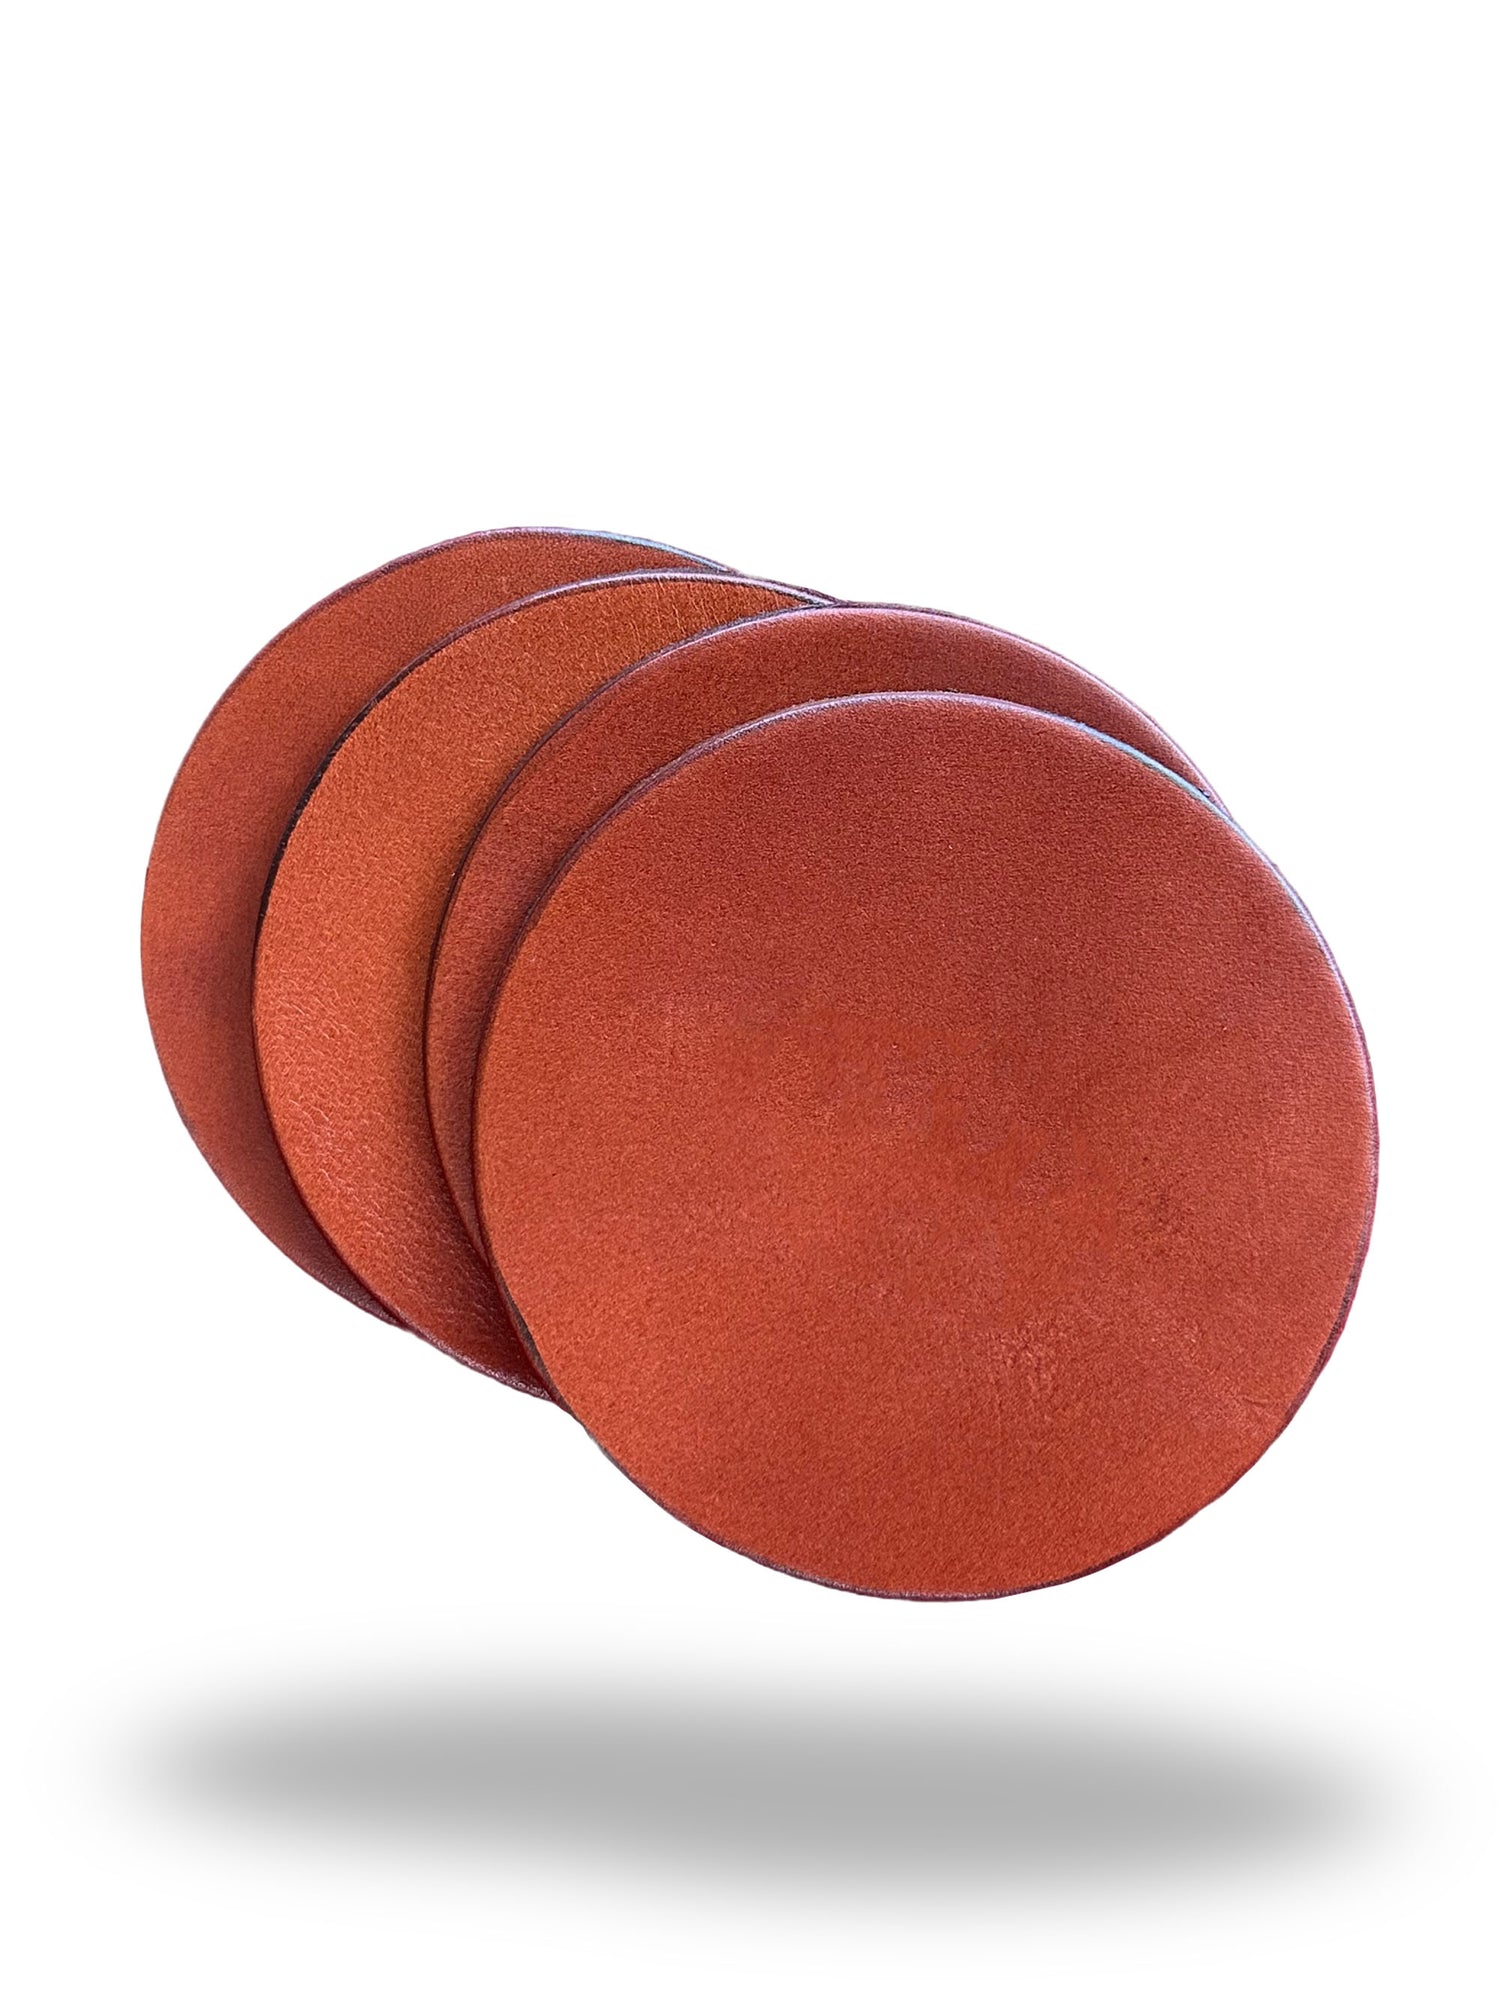 Round Leather Coasters, Plain, Customizable - Set of 4